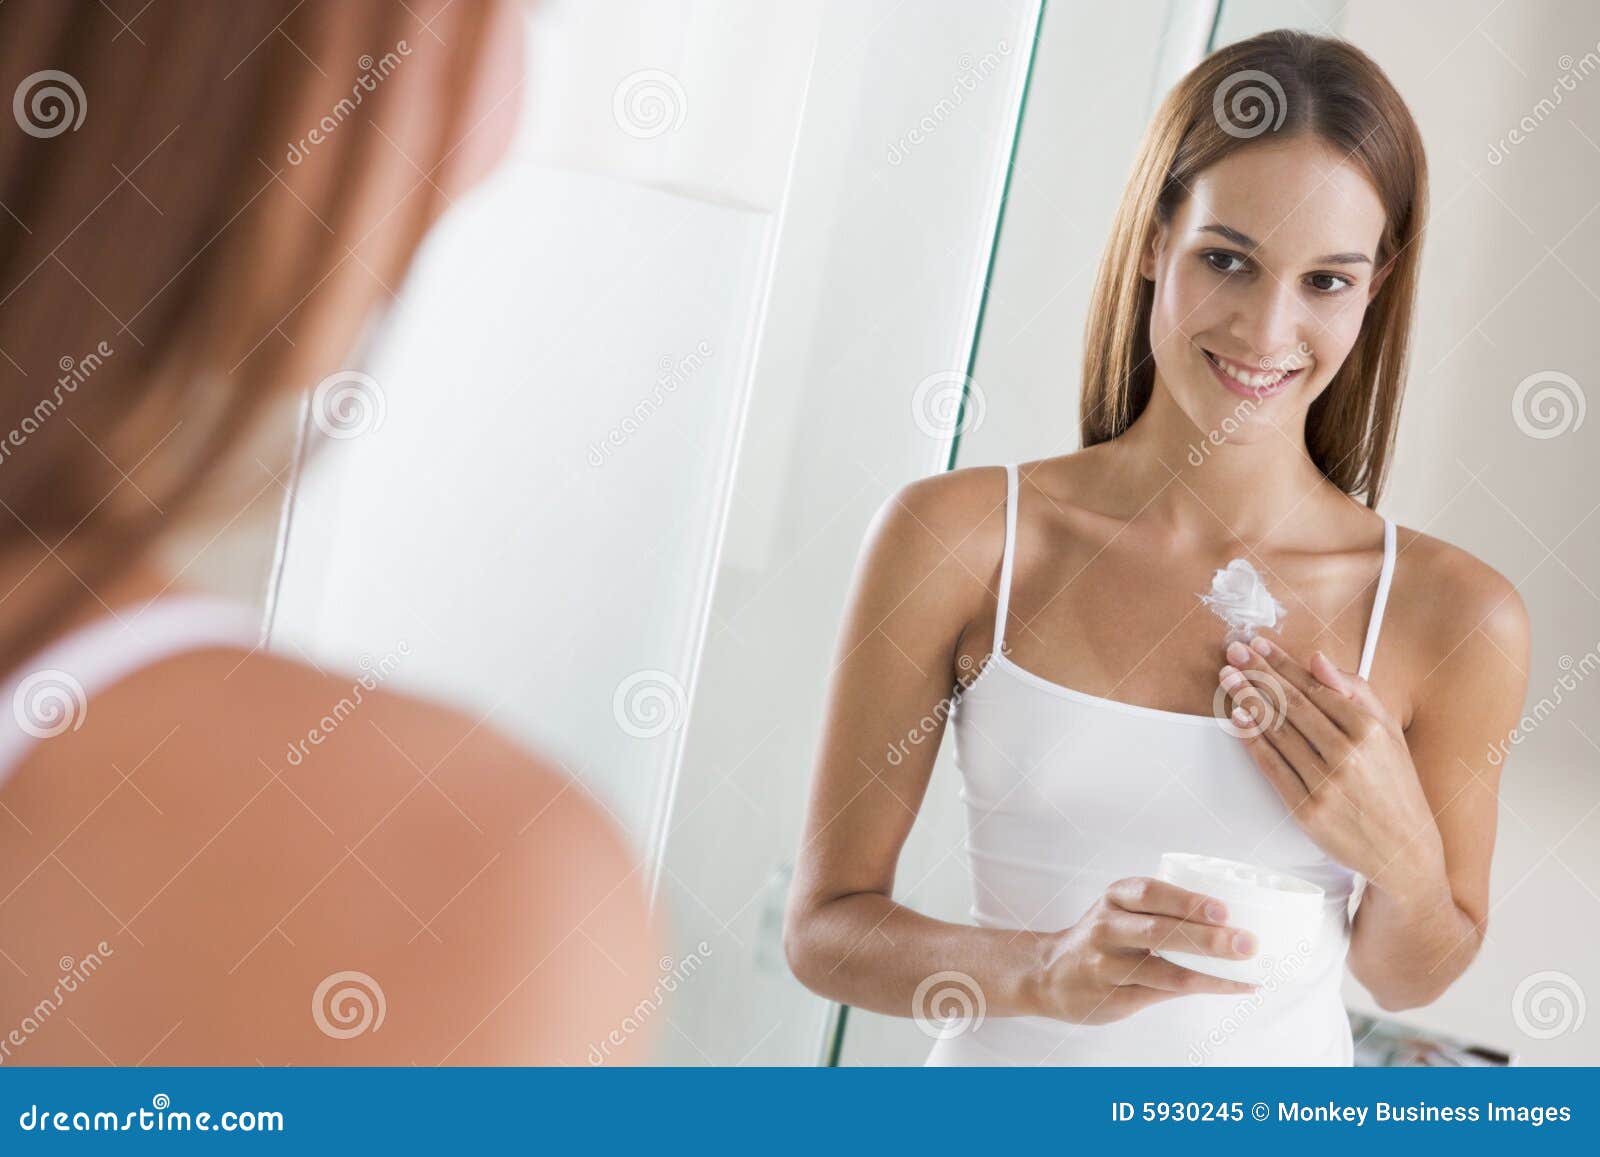 woman in bathroom applying lotion